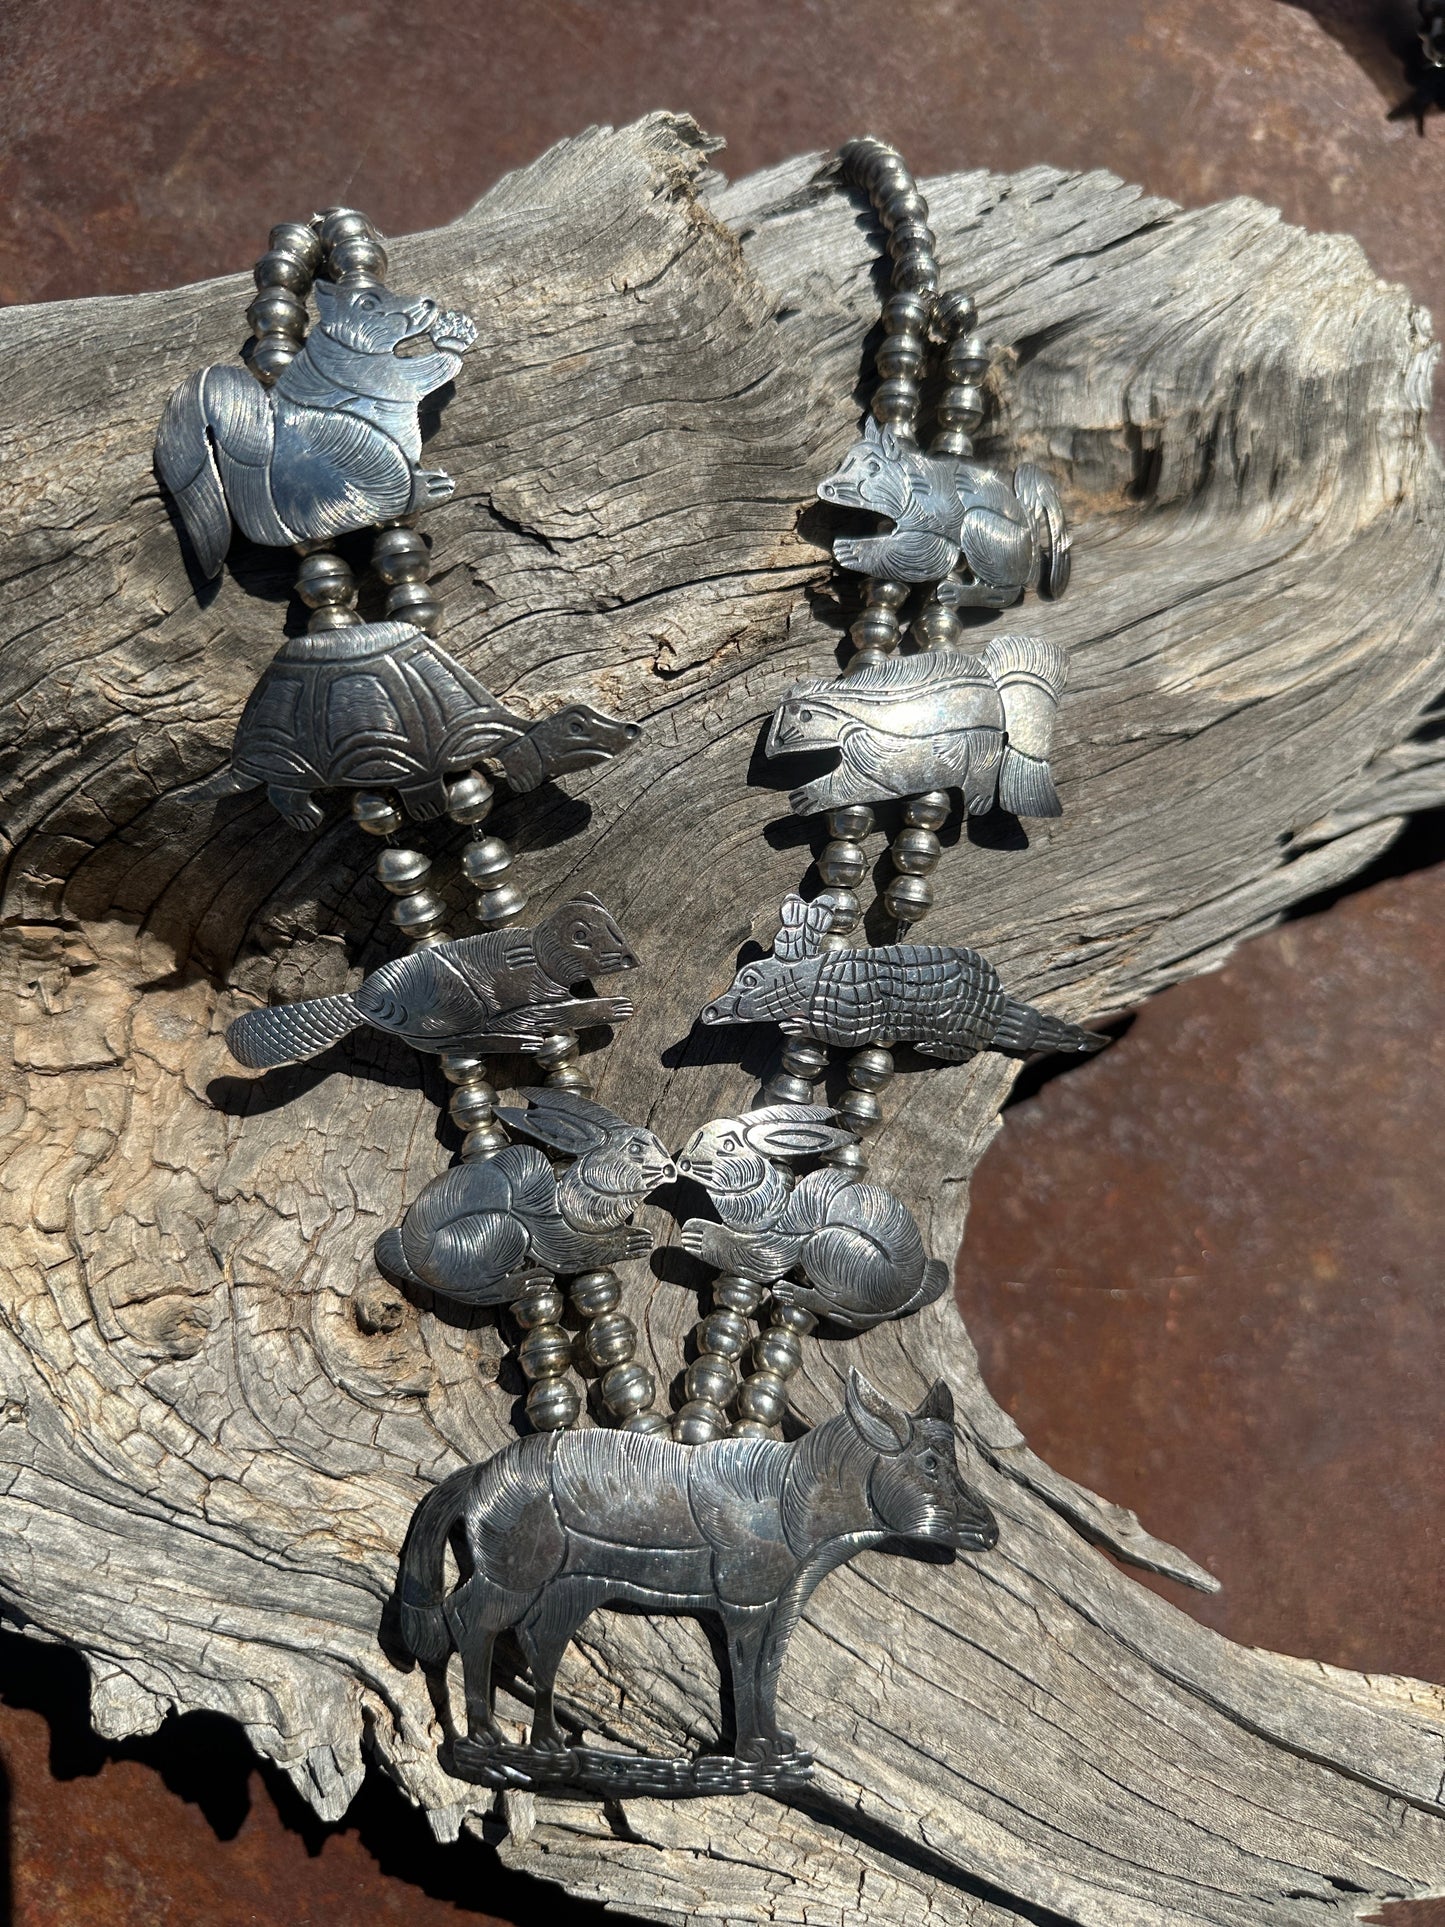 Vintage Navajo Silver Animal Necklace - Turquoise & Tufa